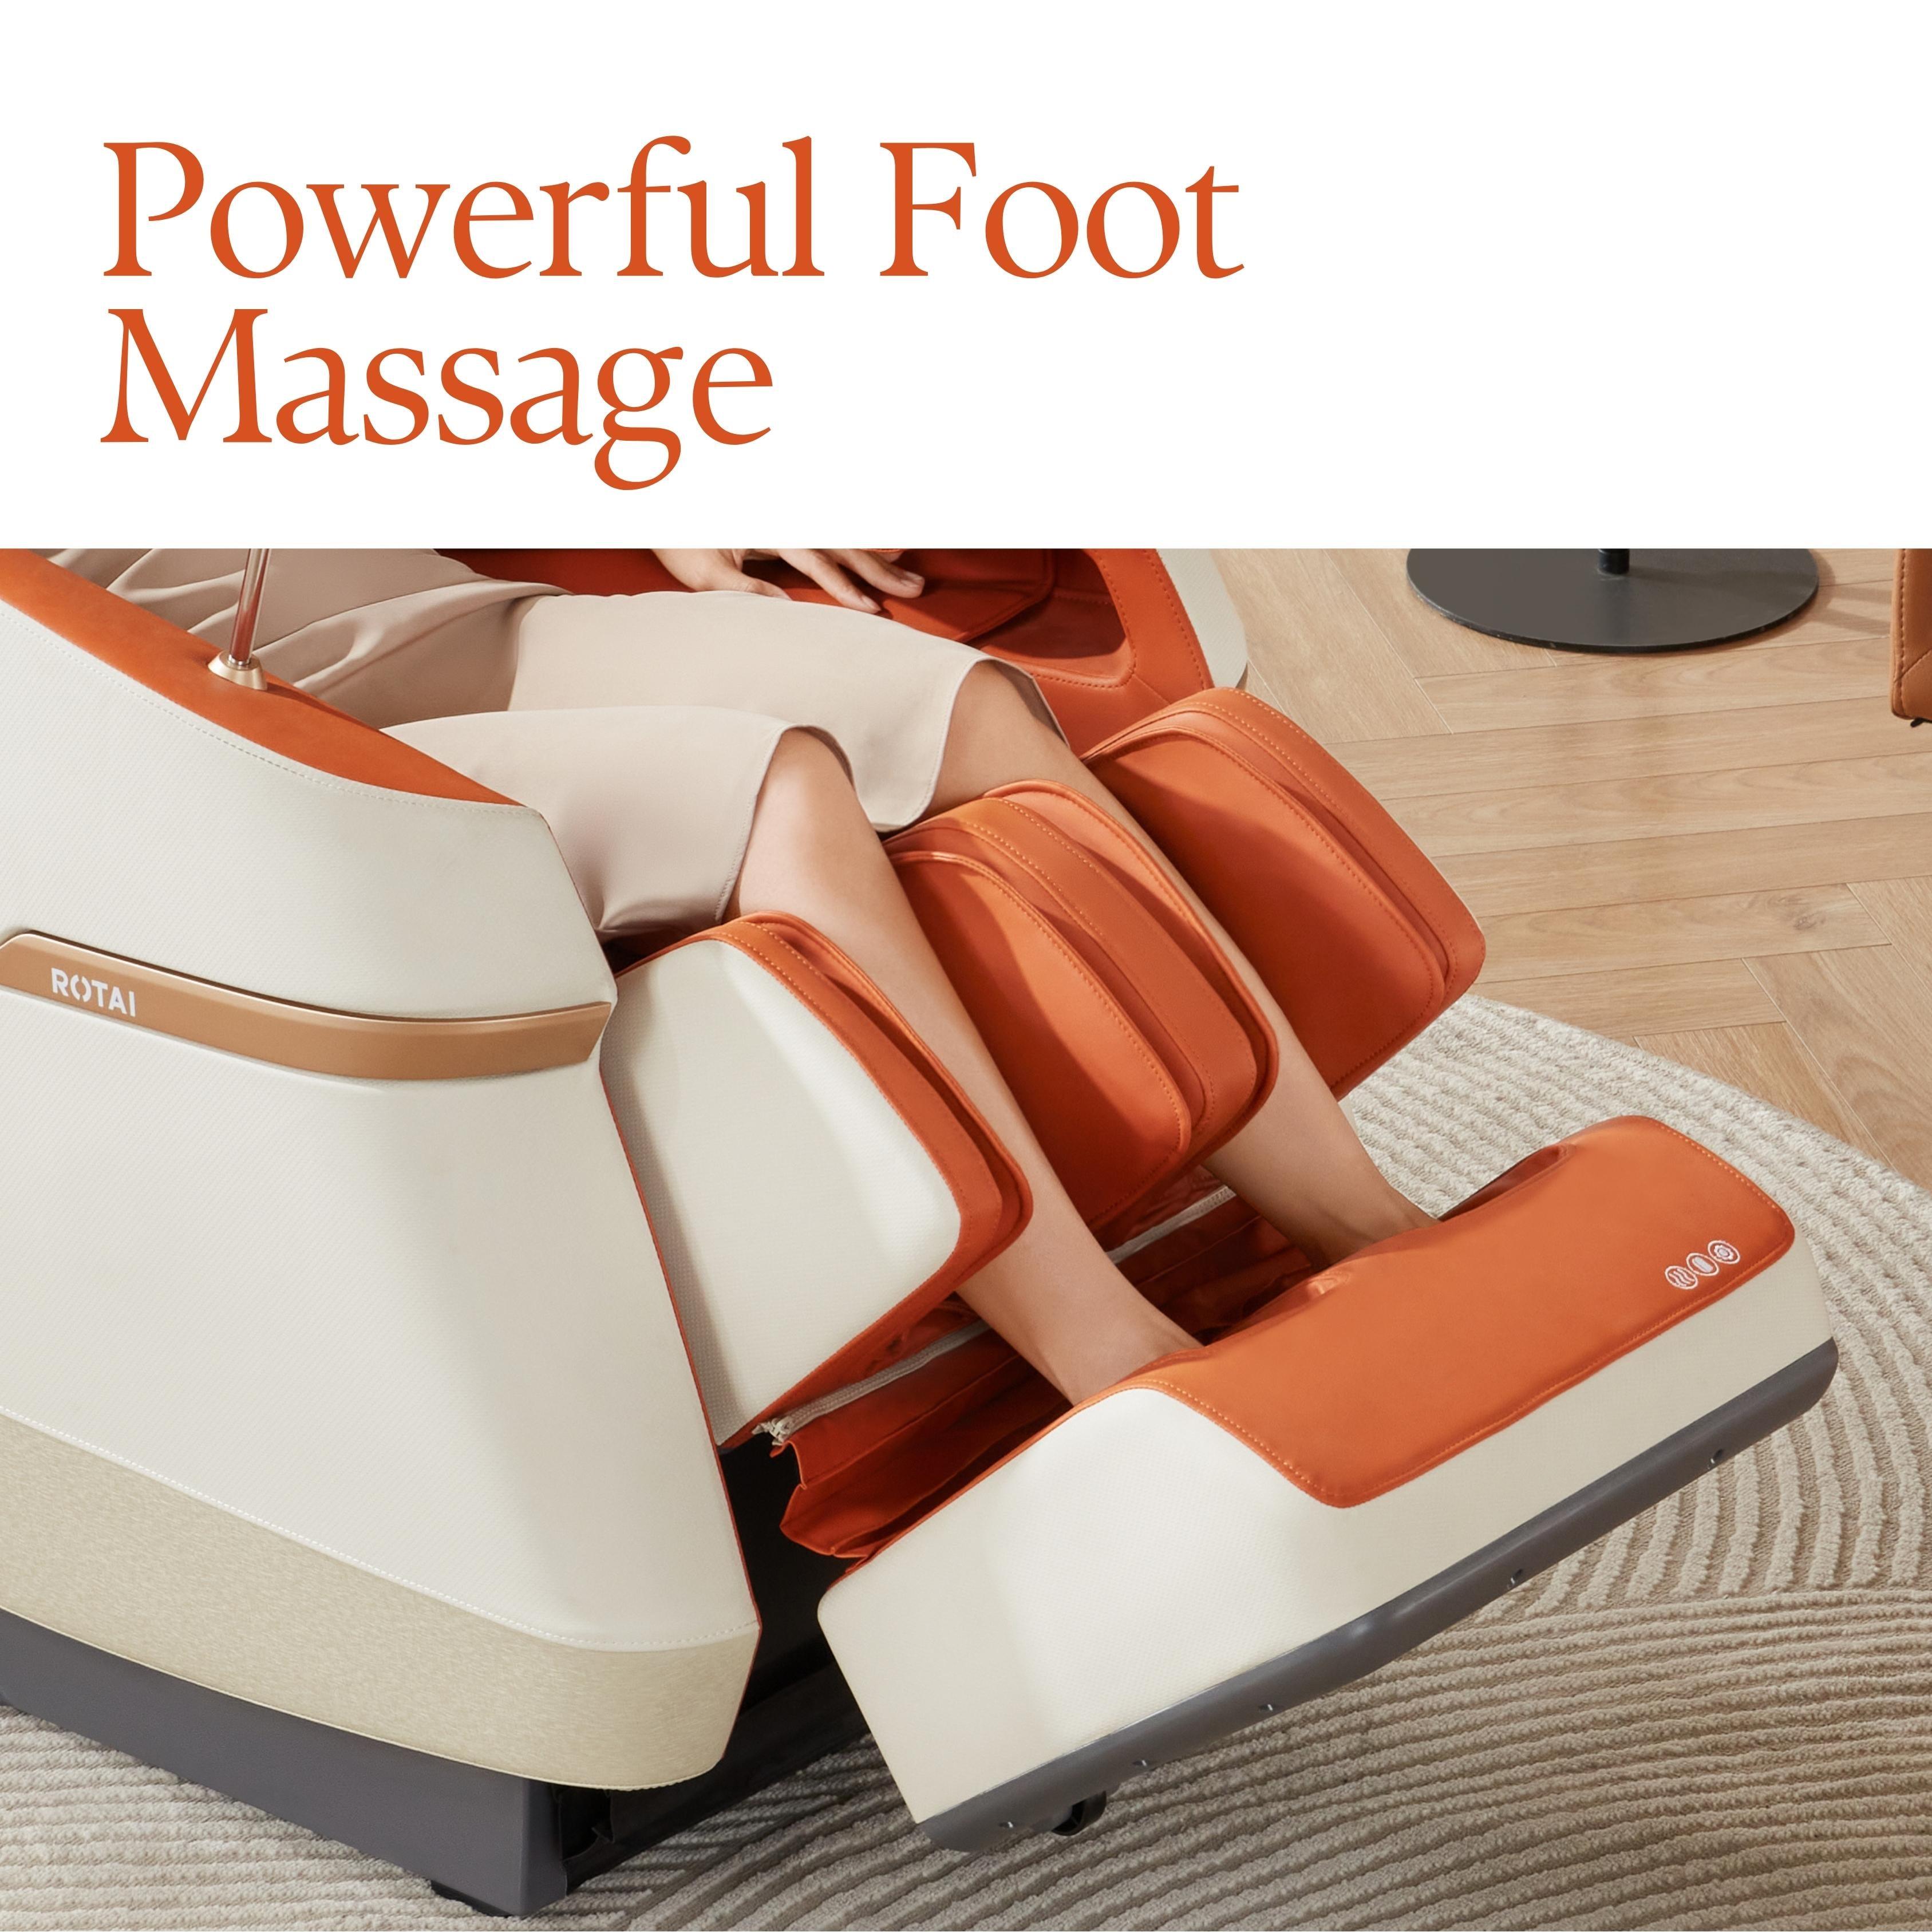 Orange Jimny massage chair providing powerful foot massage for relaxation. Best massage chair UAE.